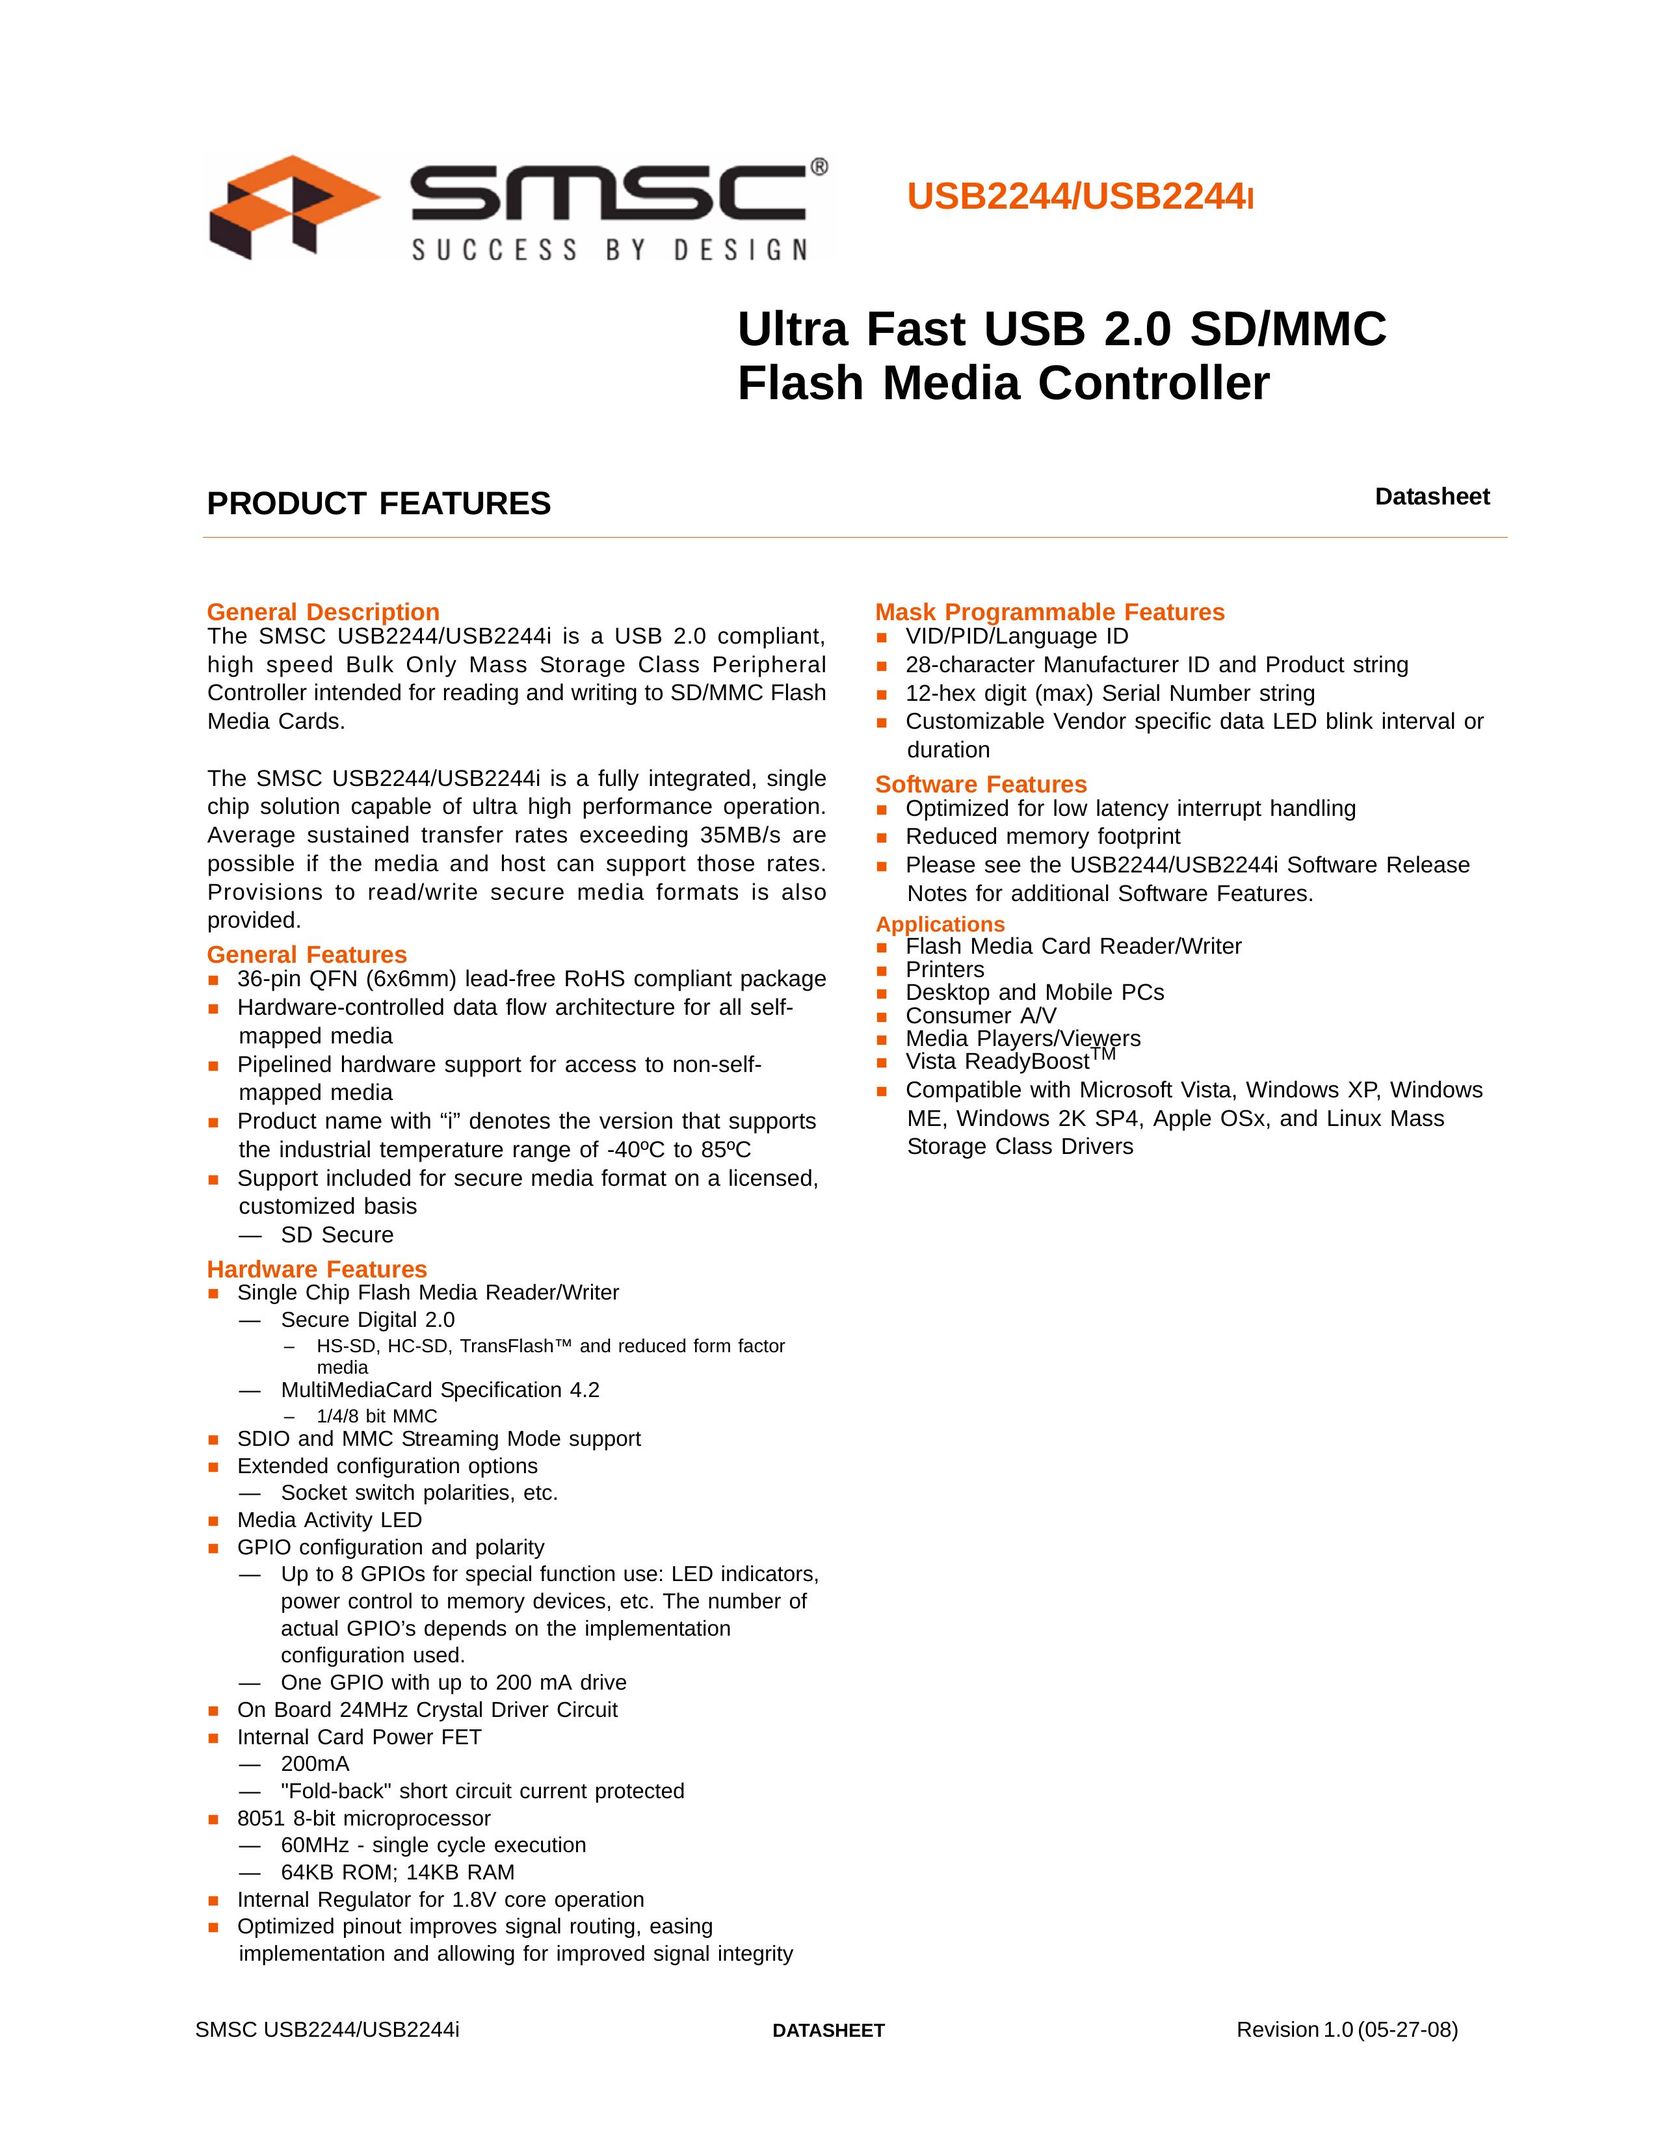 SMSC USB2244i Network Card User Manual